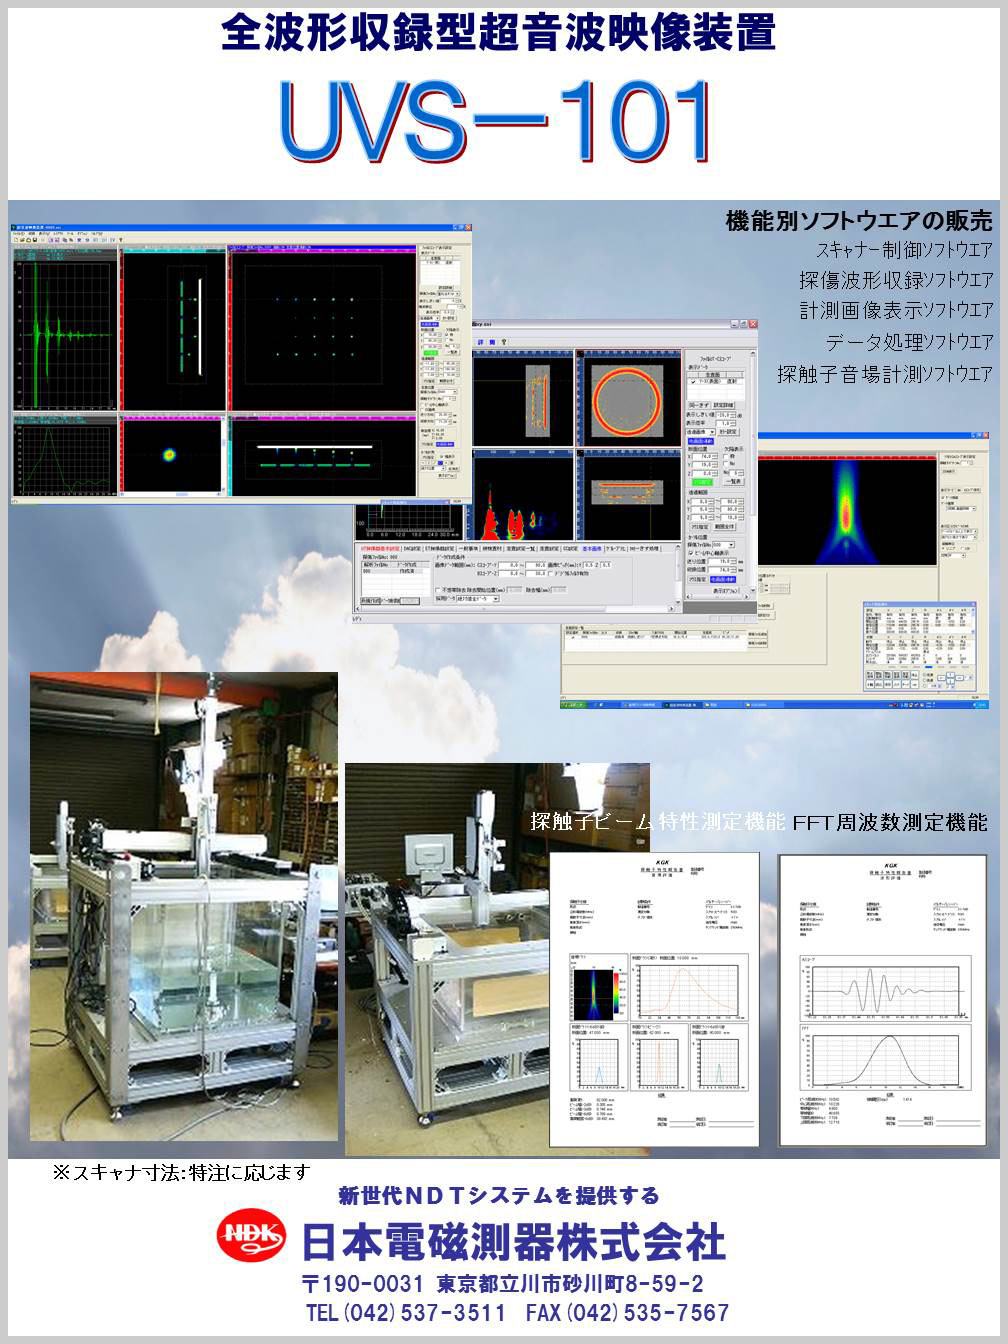 UVS-101 全波形収録型超音波映像装置(1.25MB)